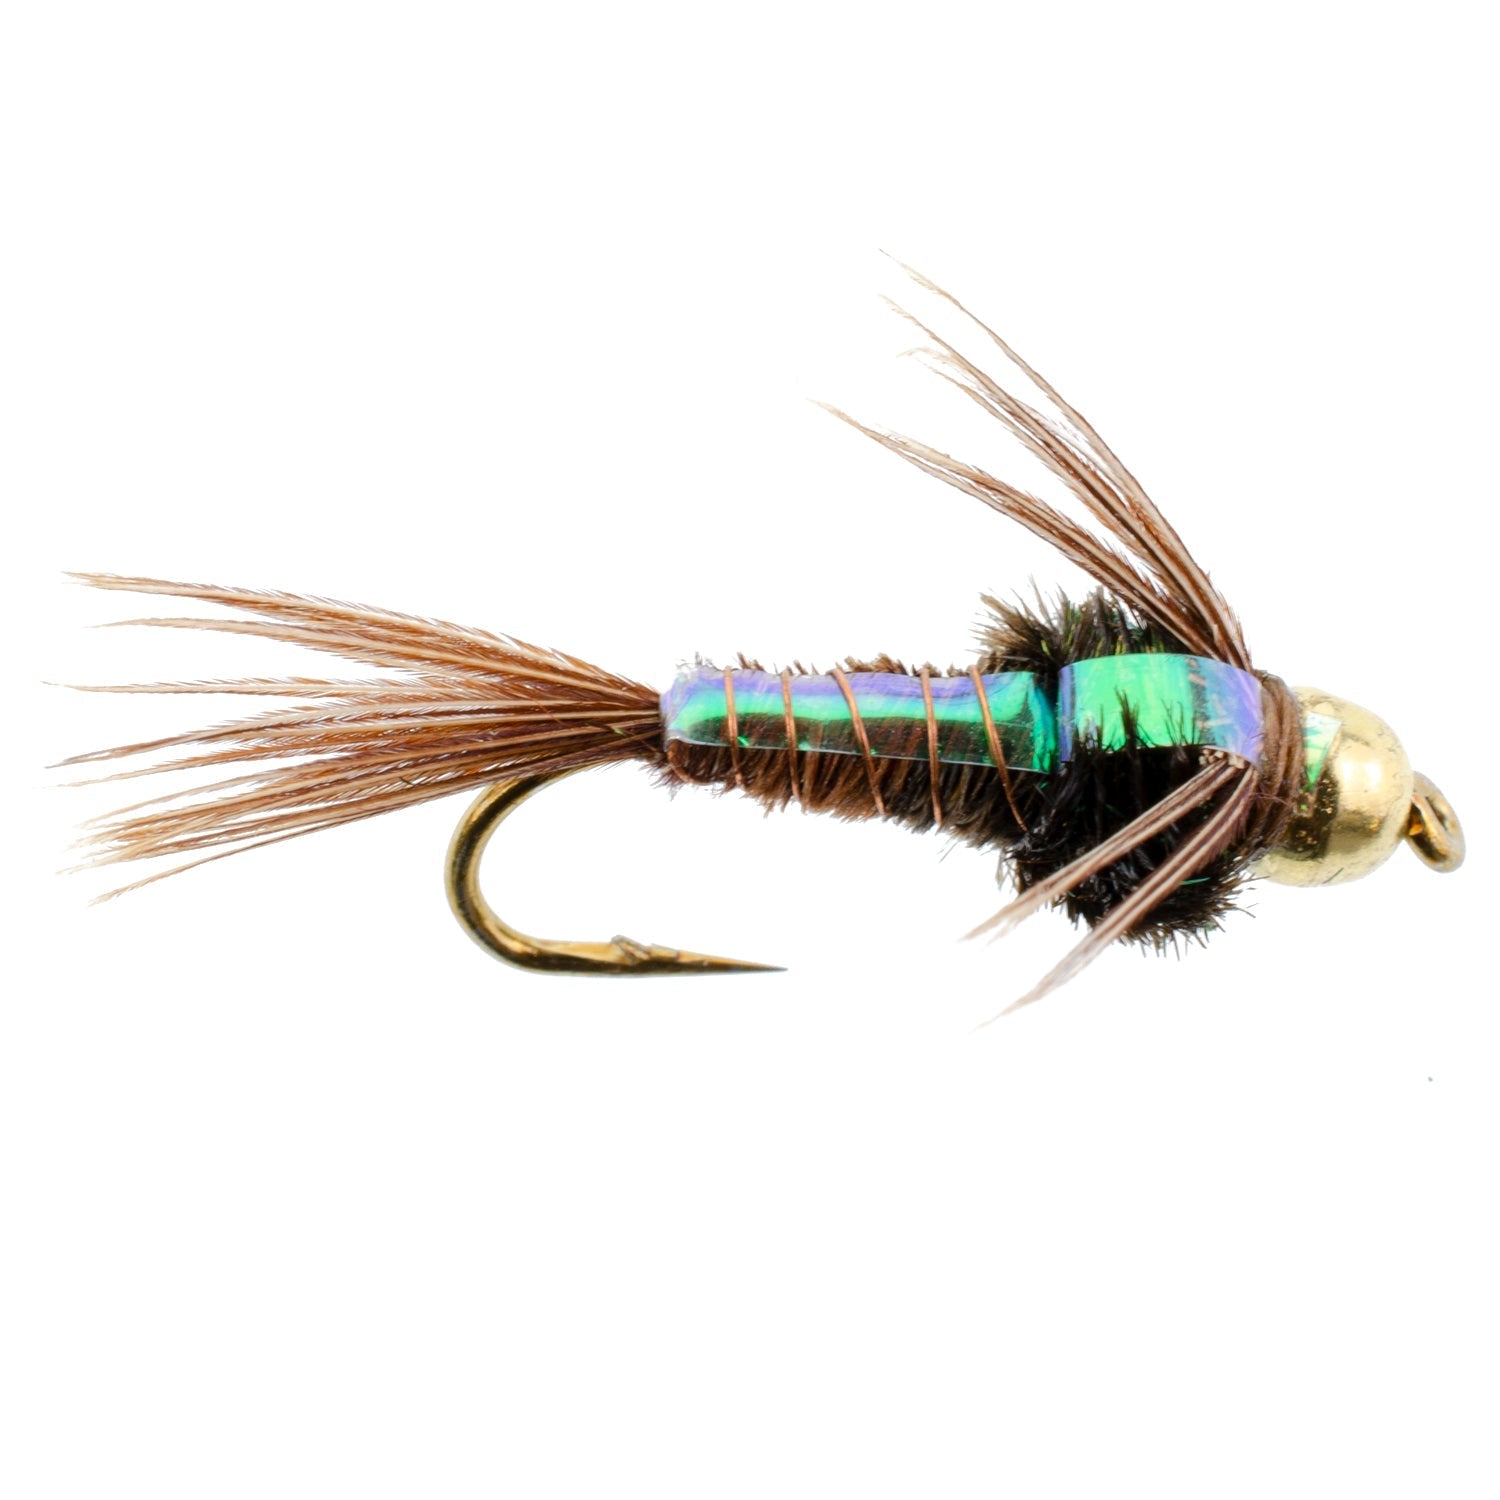 Bead Head Flash Back Pheasant Tail Nymph Fly Fishing Flies - 6 Flies Hook Size 14